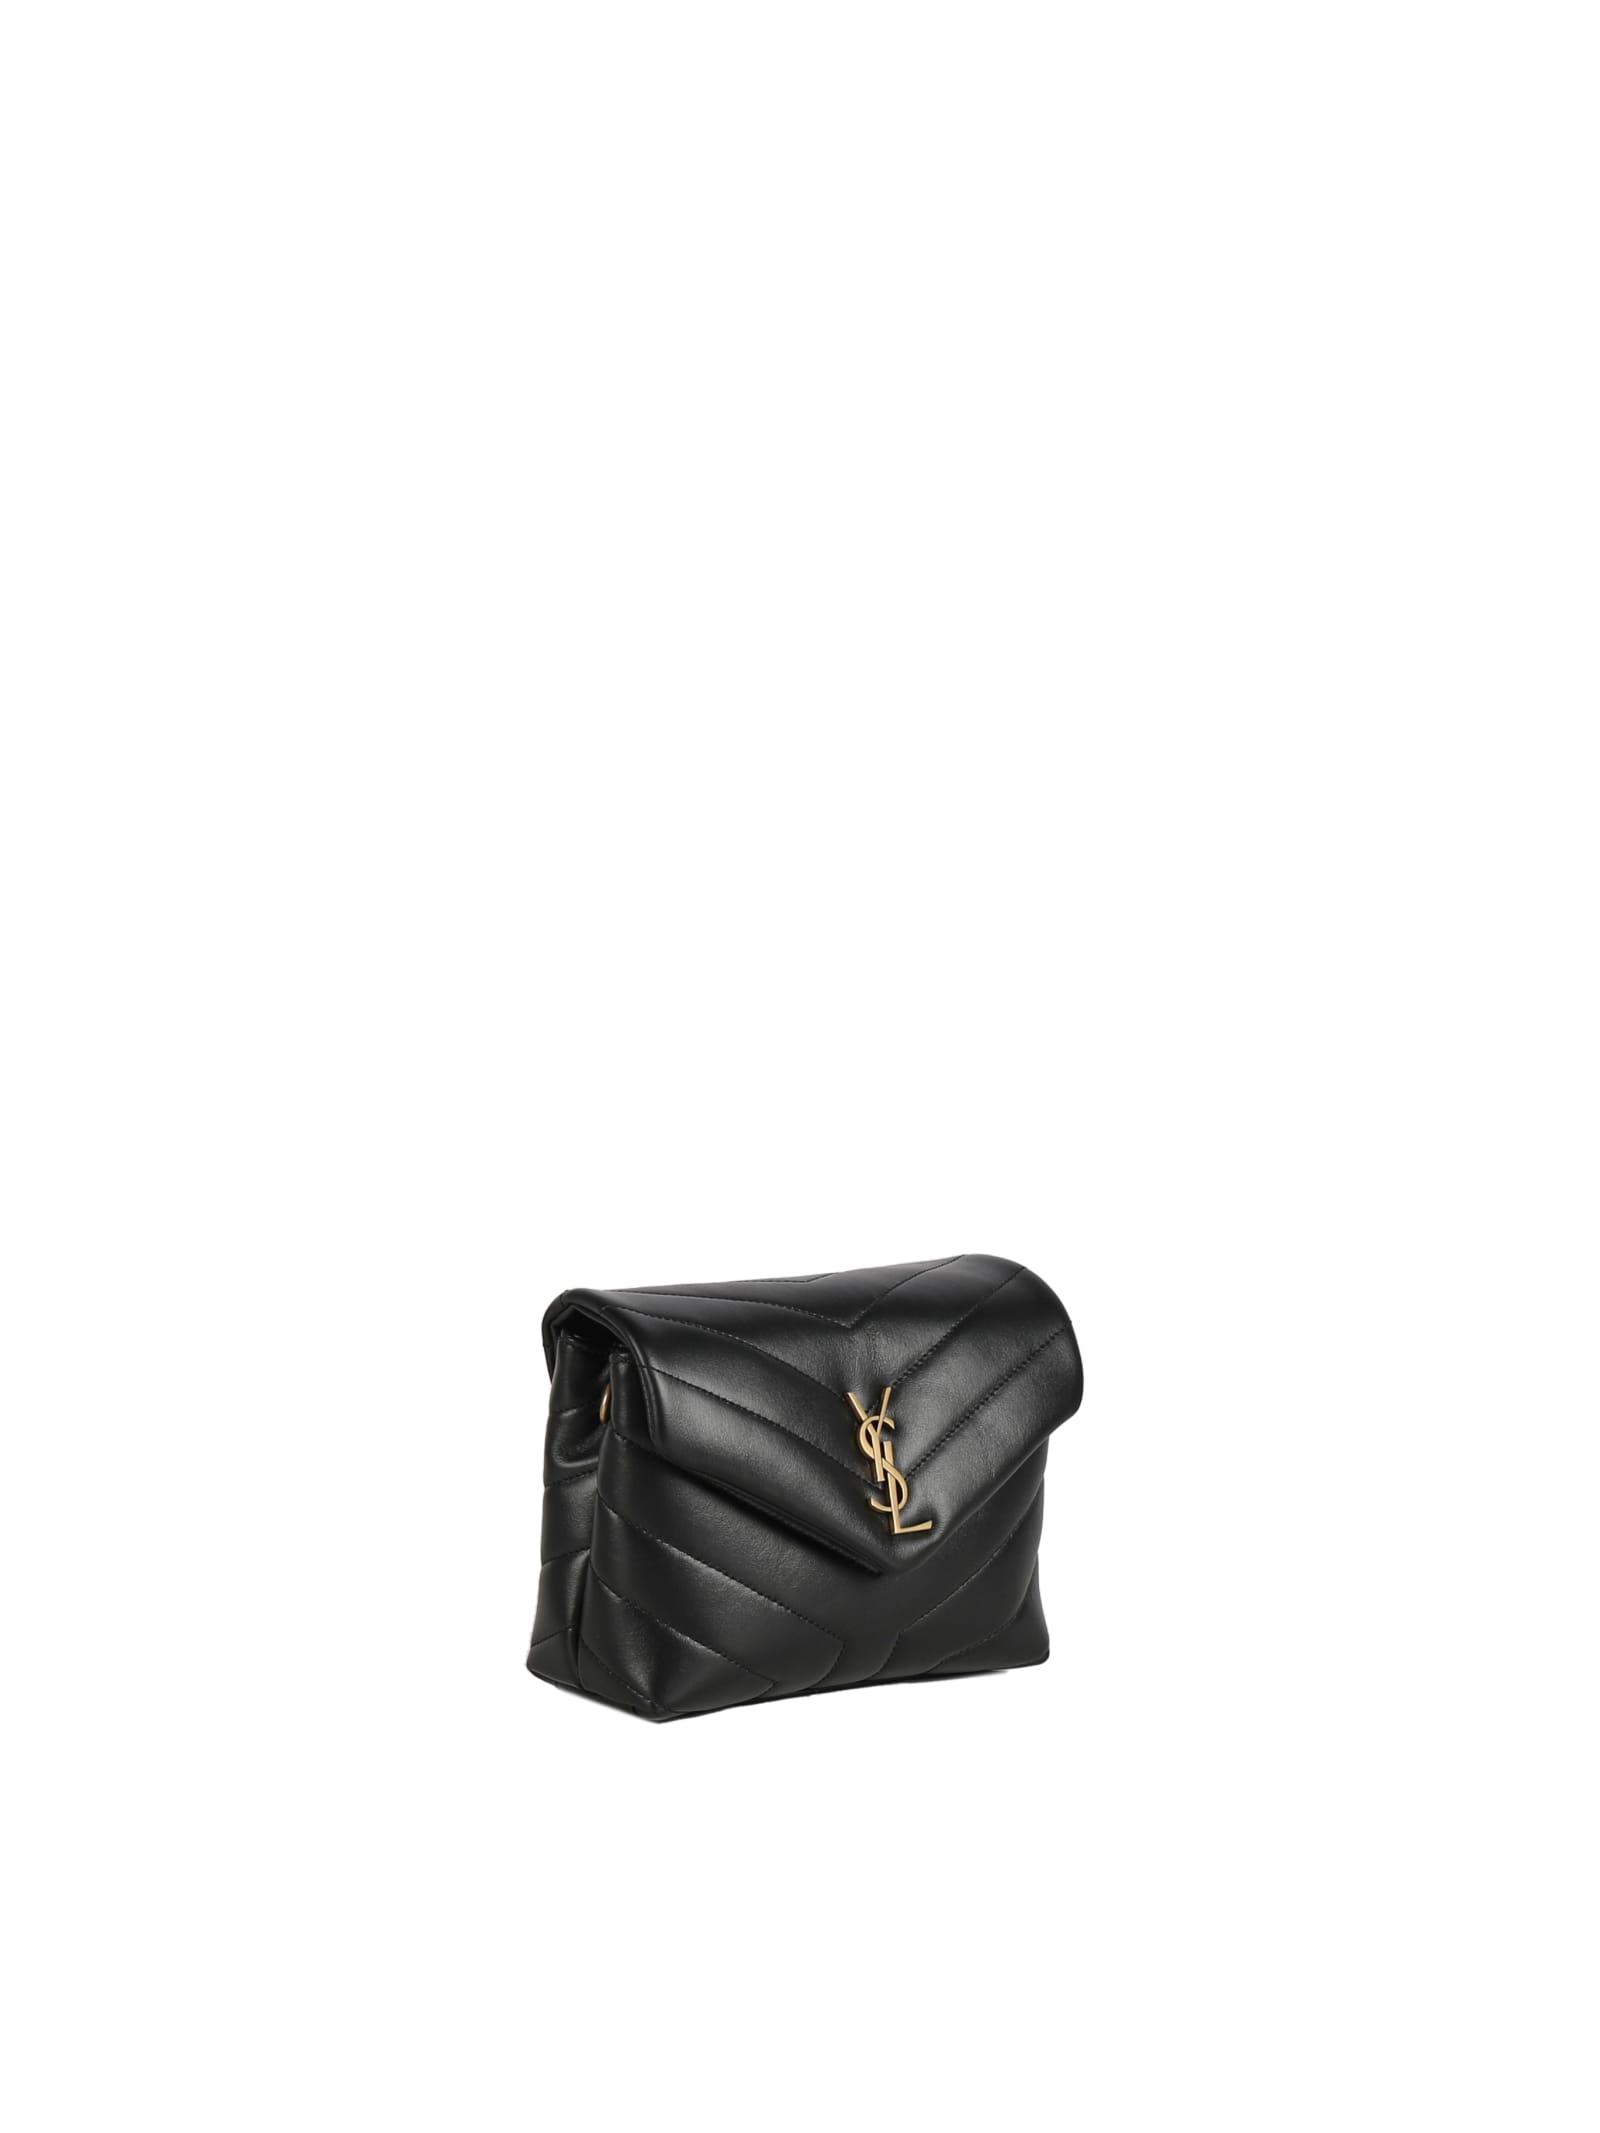 Saint Laurent Sadie Ysl Patent Leather Hobo Bag